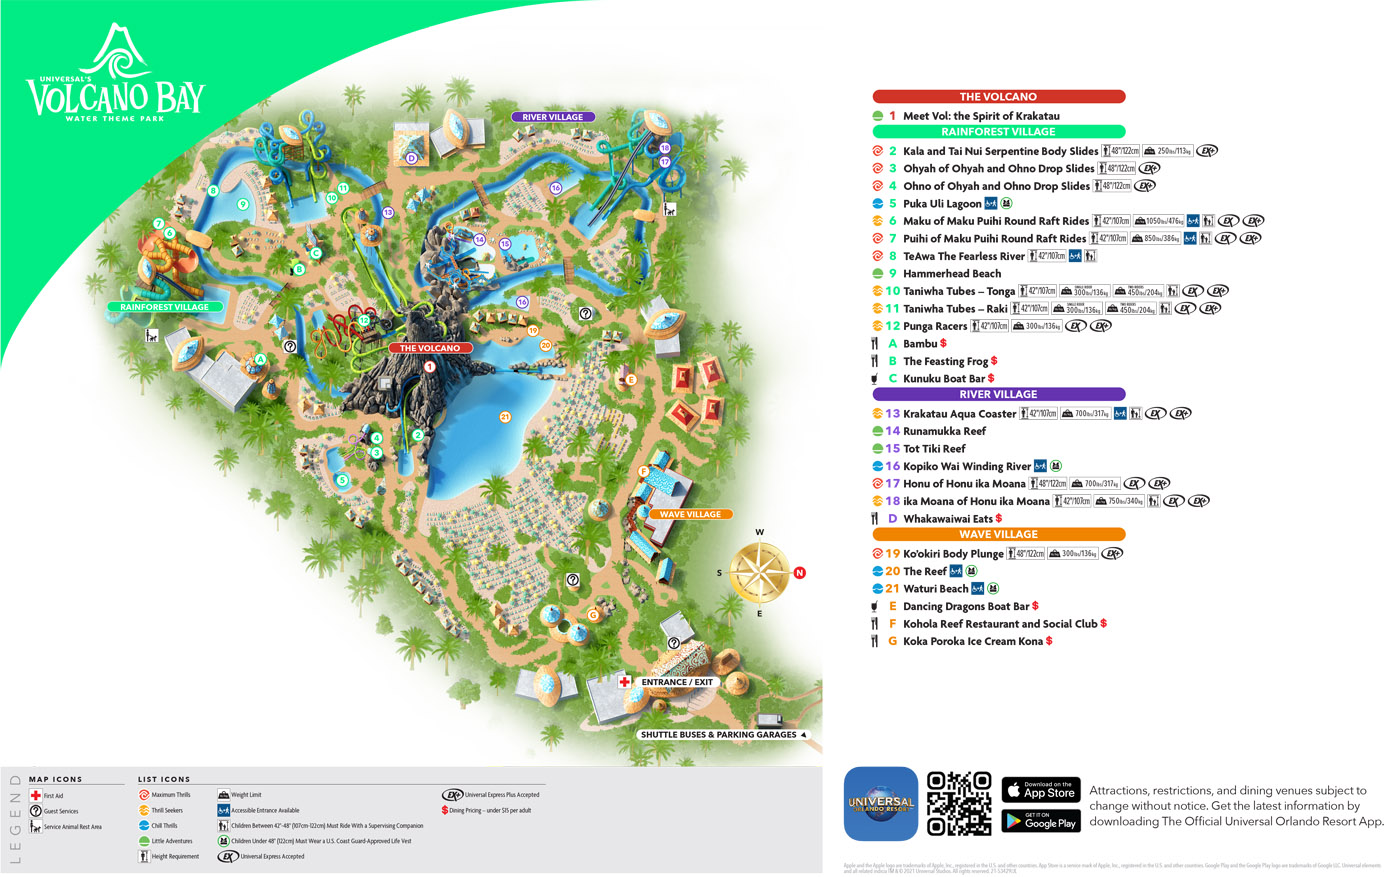 Universal Orlando Volcano Bay Water Park Map